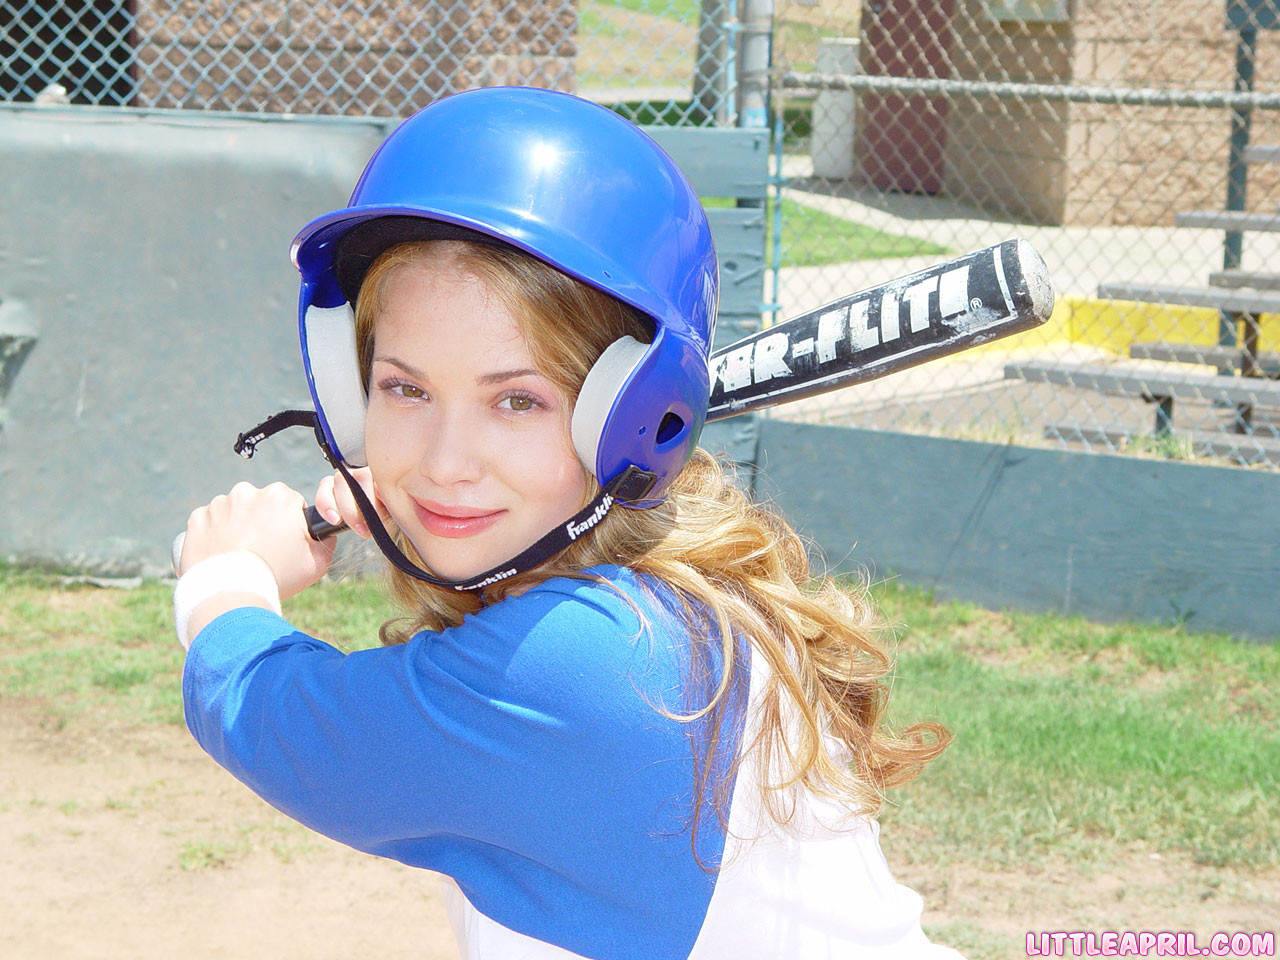 April looking cute in her baseball uniform #68111143